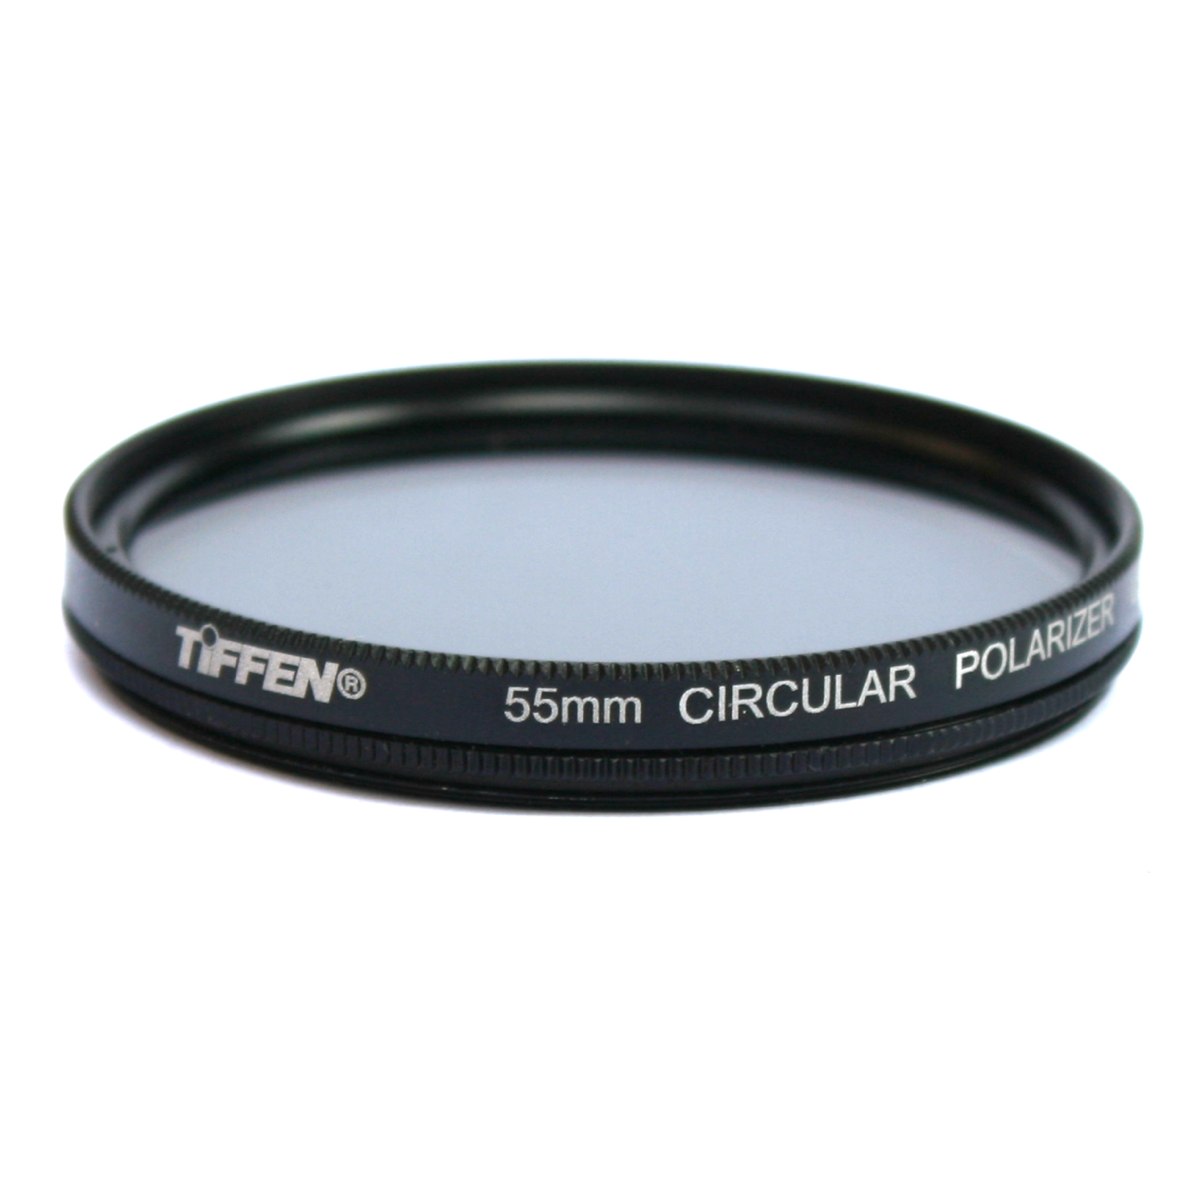 Tiffen 55mm Circular Polarizer Filter